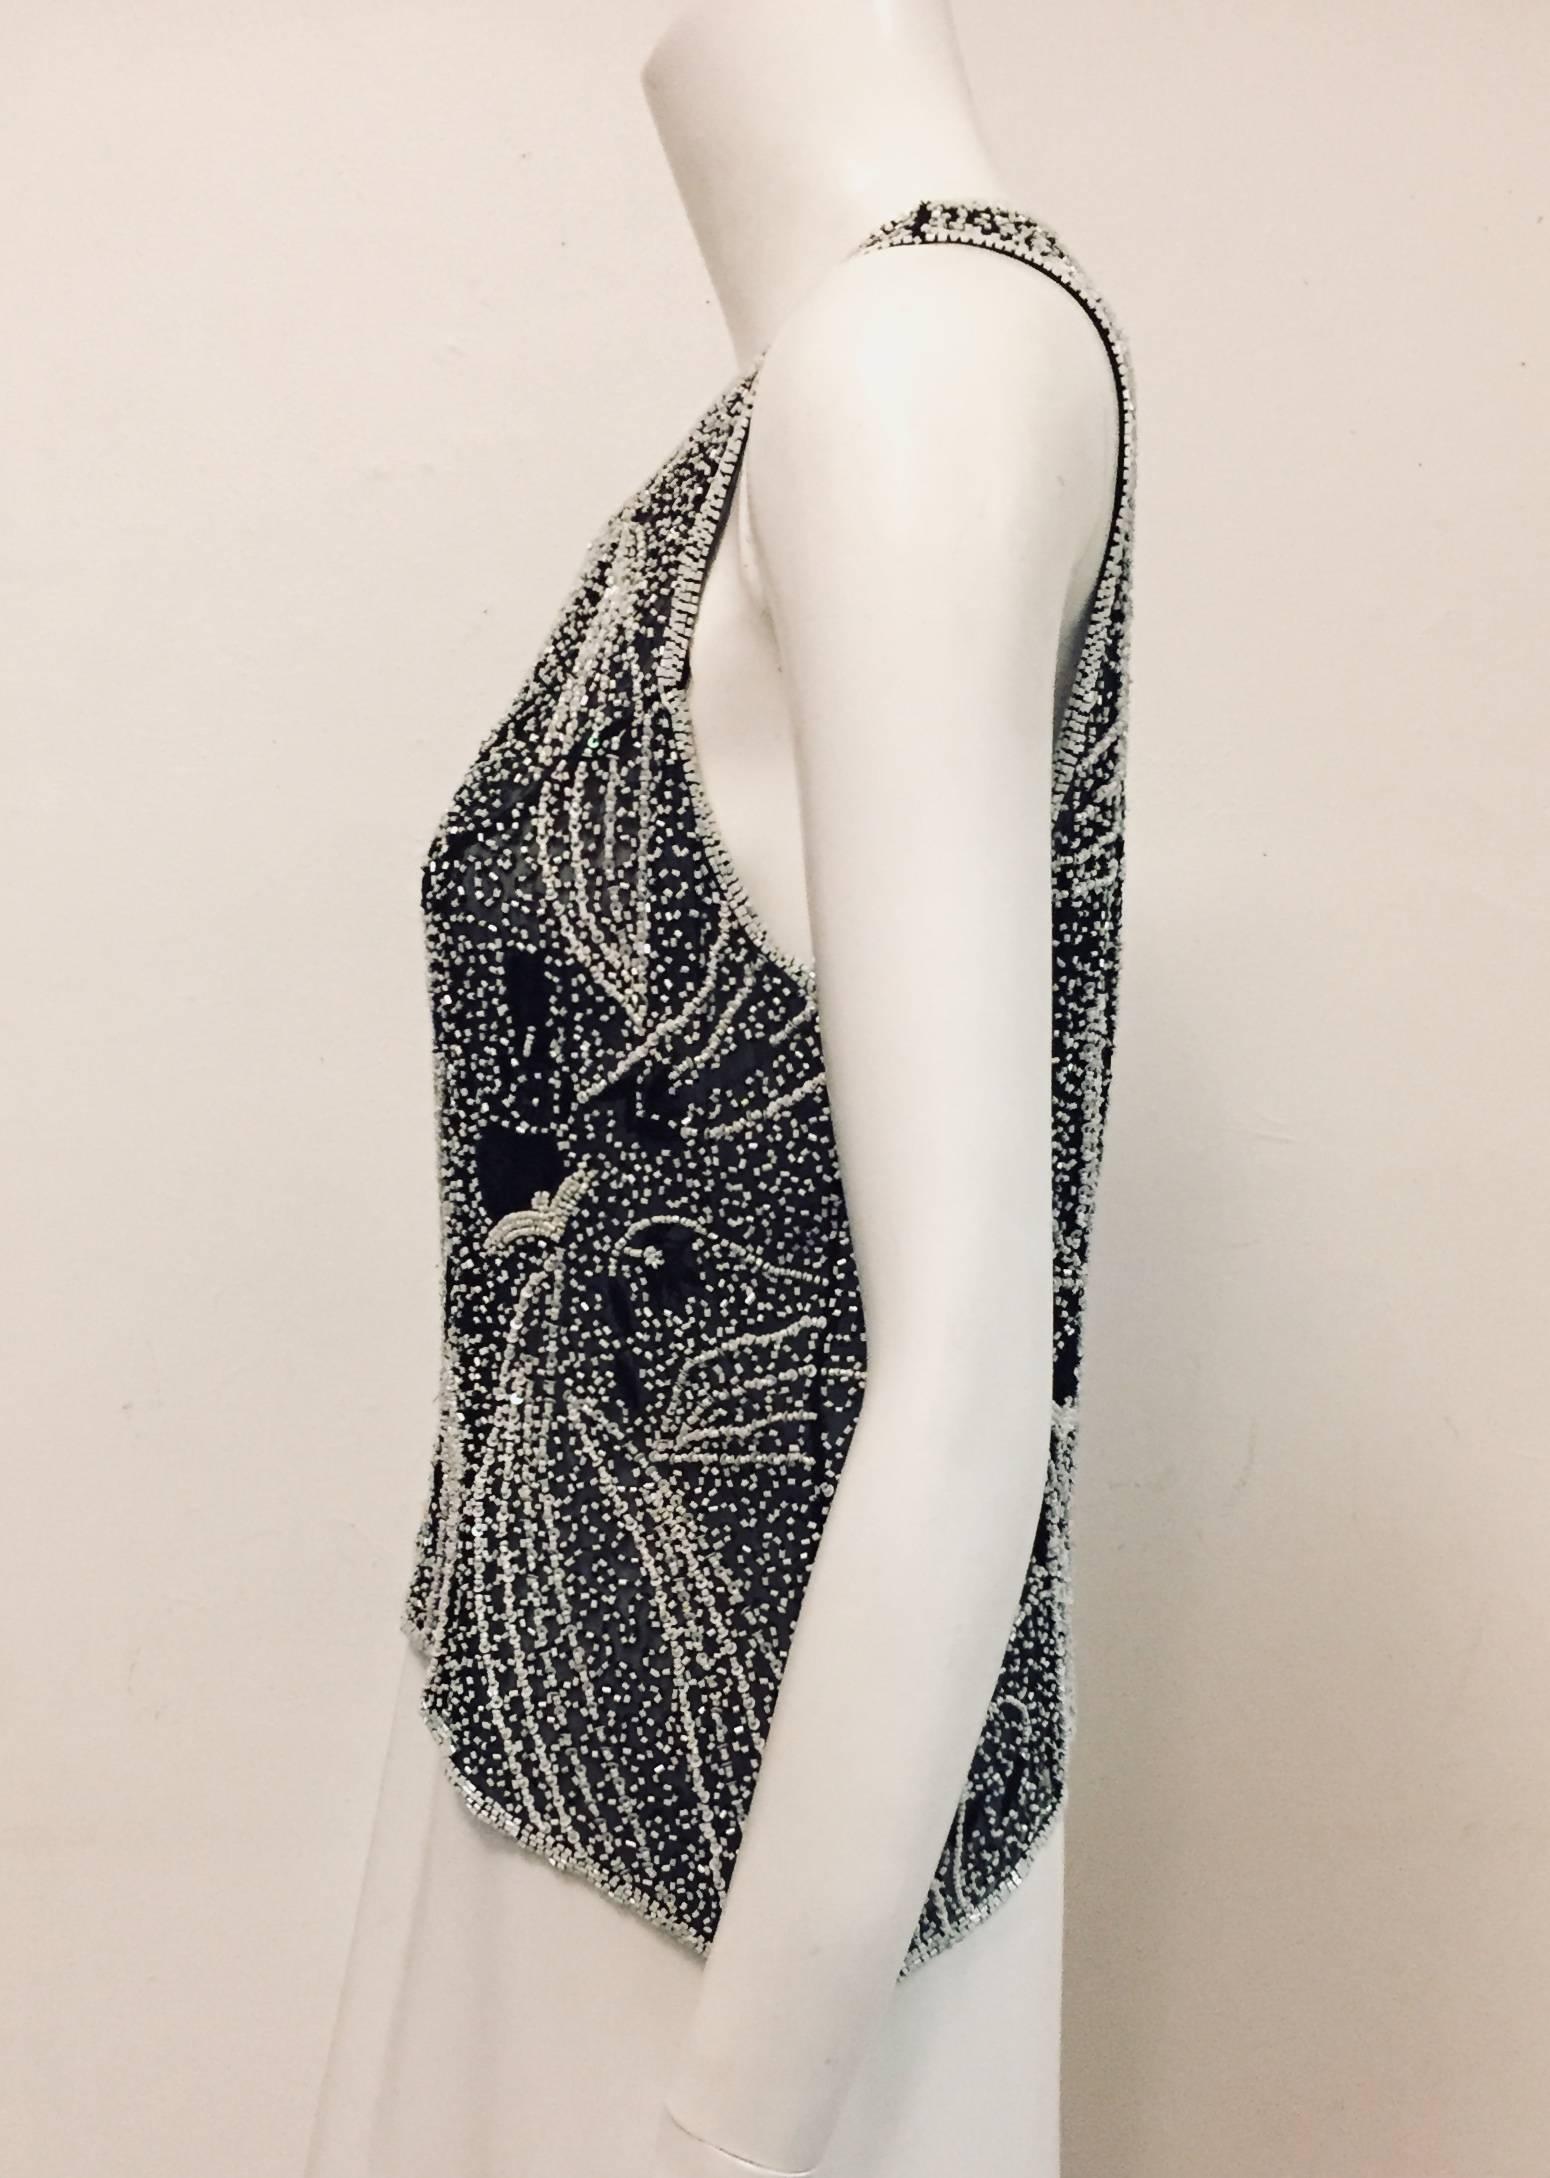 Women's Saint Laurent Black and White Beaded Sleeveless Top with Asymmetric Hem For Sale